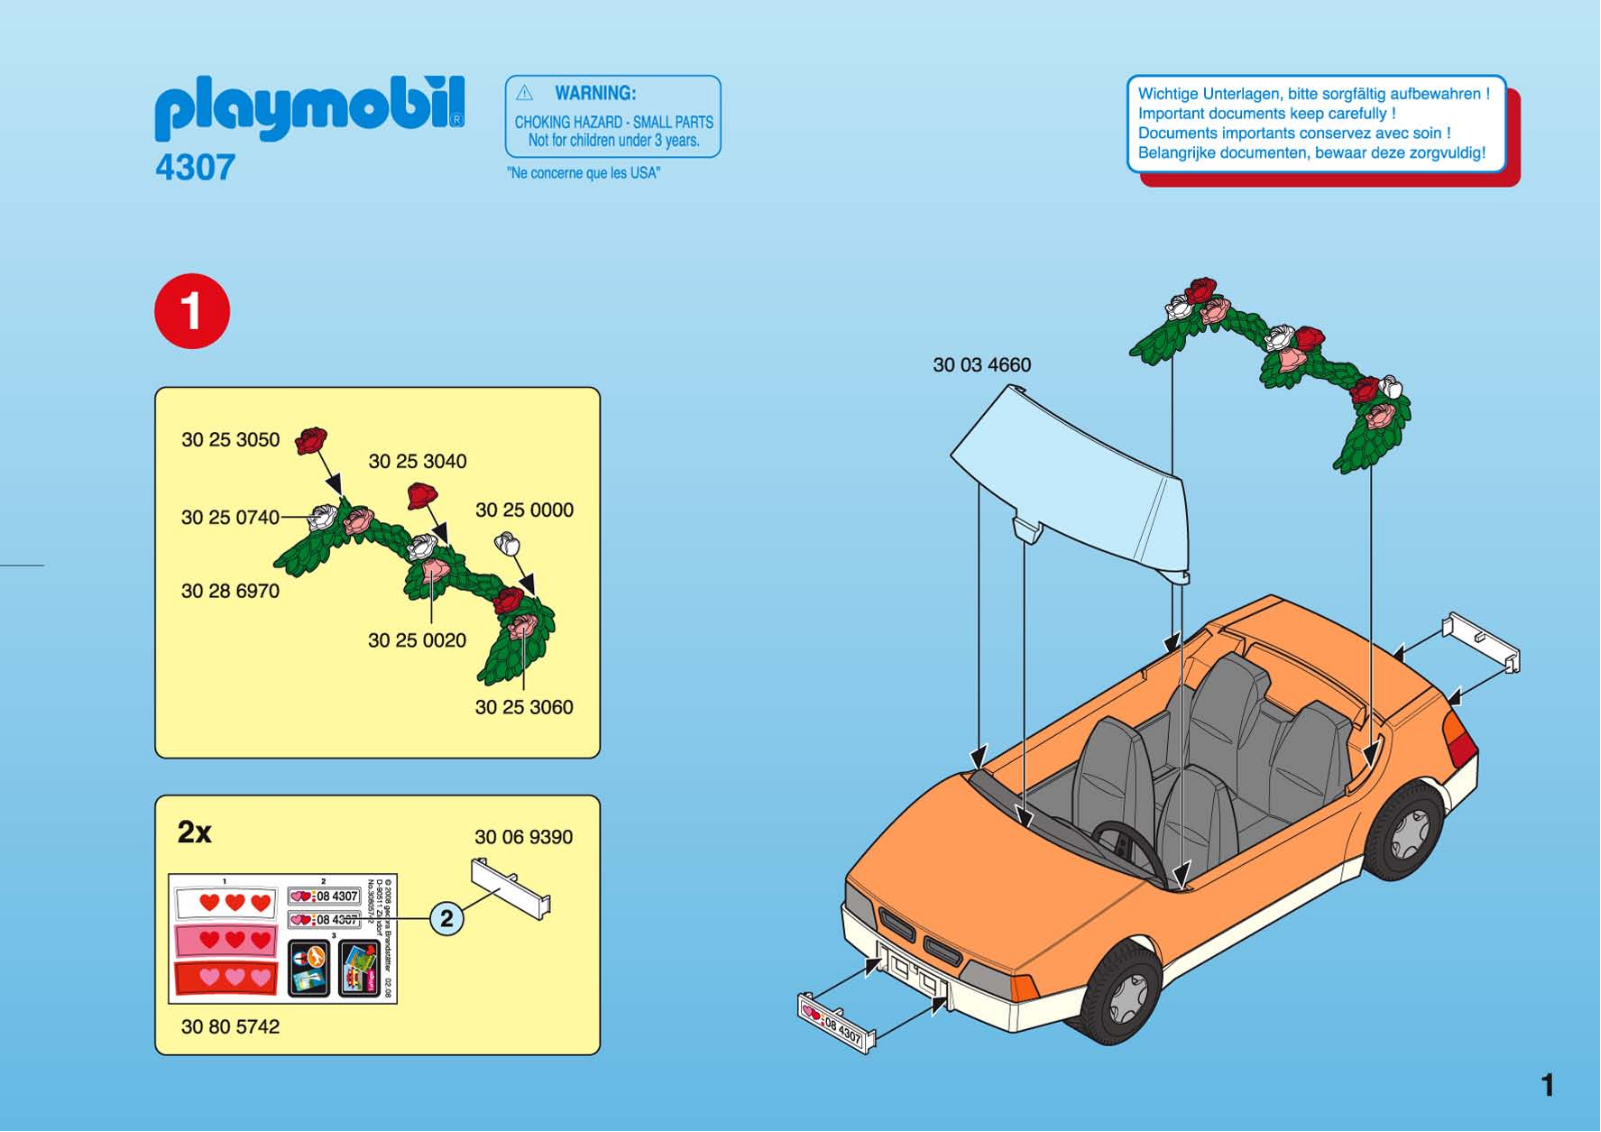 Playmobil 4307 Instructions